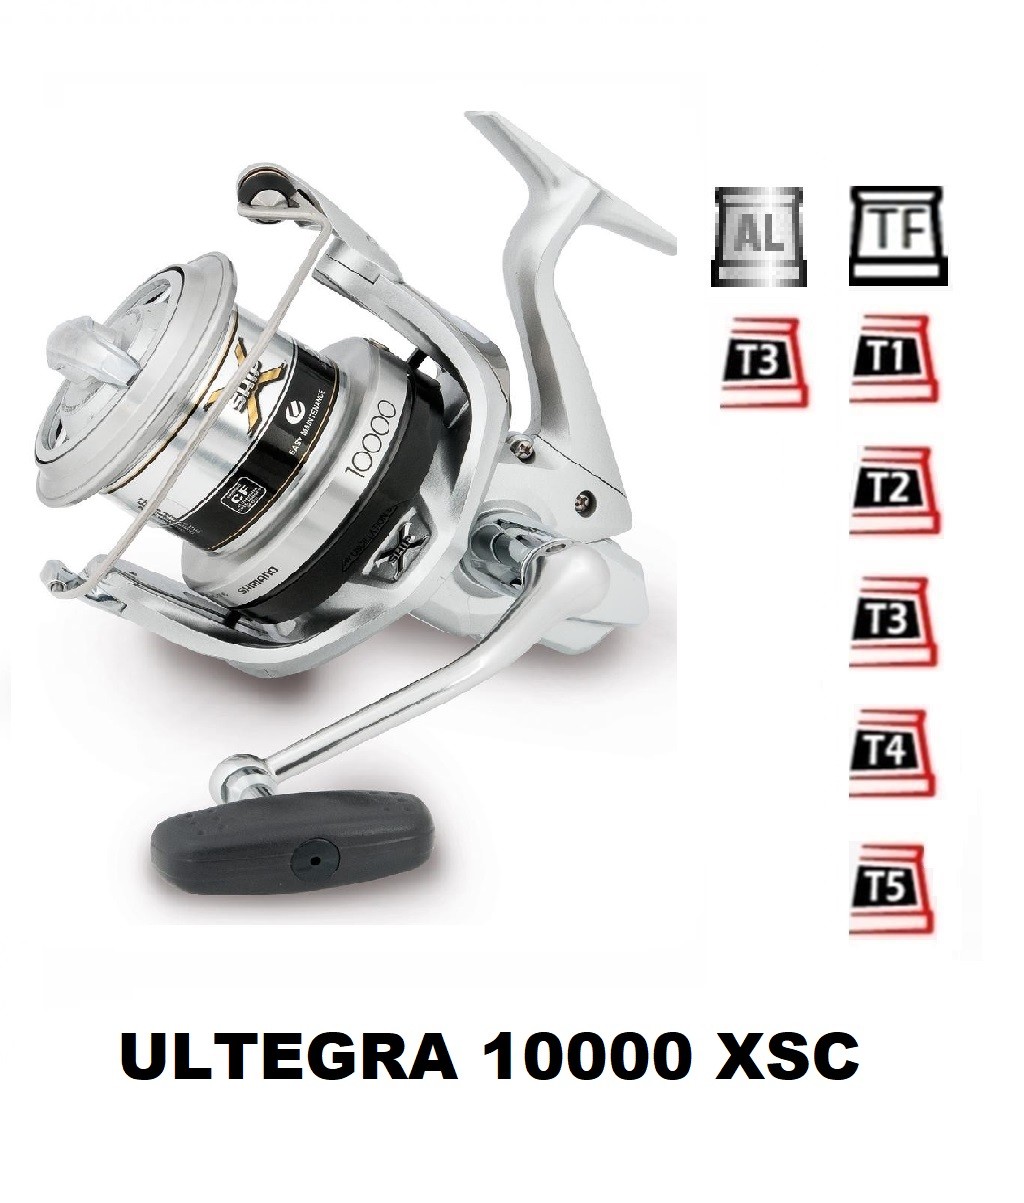 ▷ Spare Spools Compatible with Ultegra 10000 Xsc【Mv Spools】